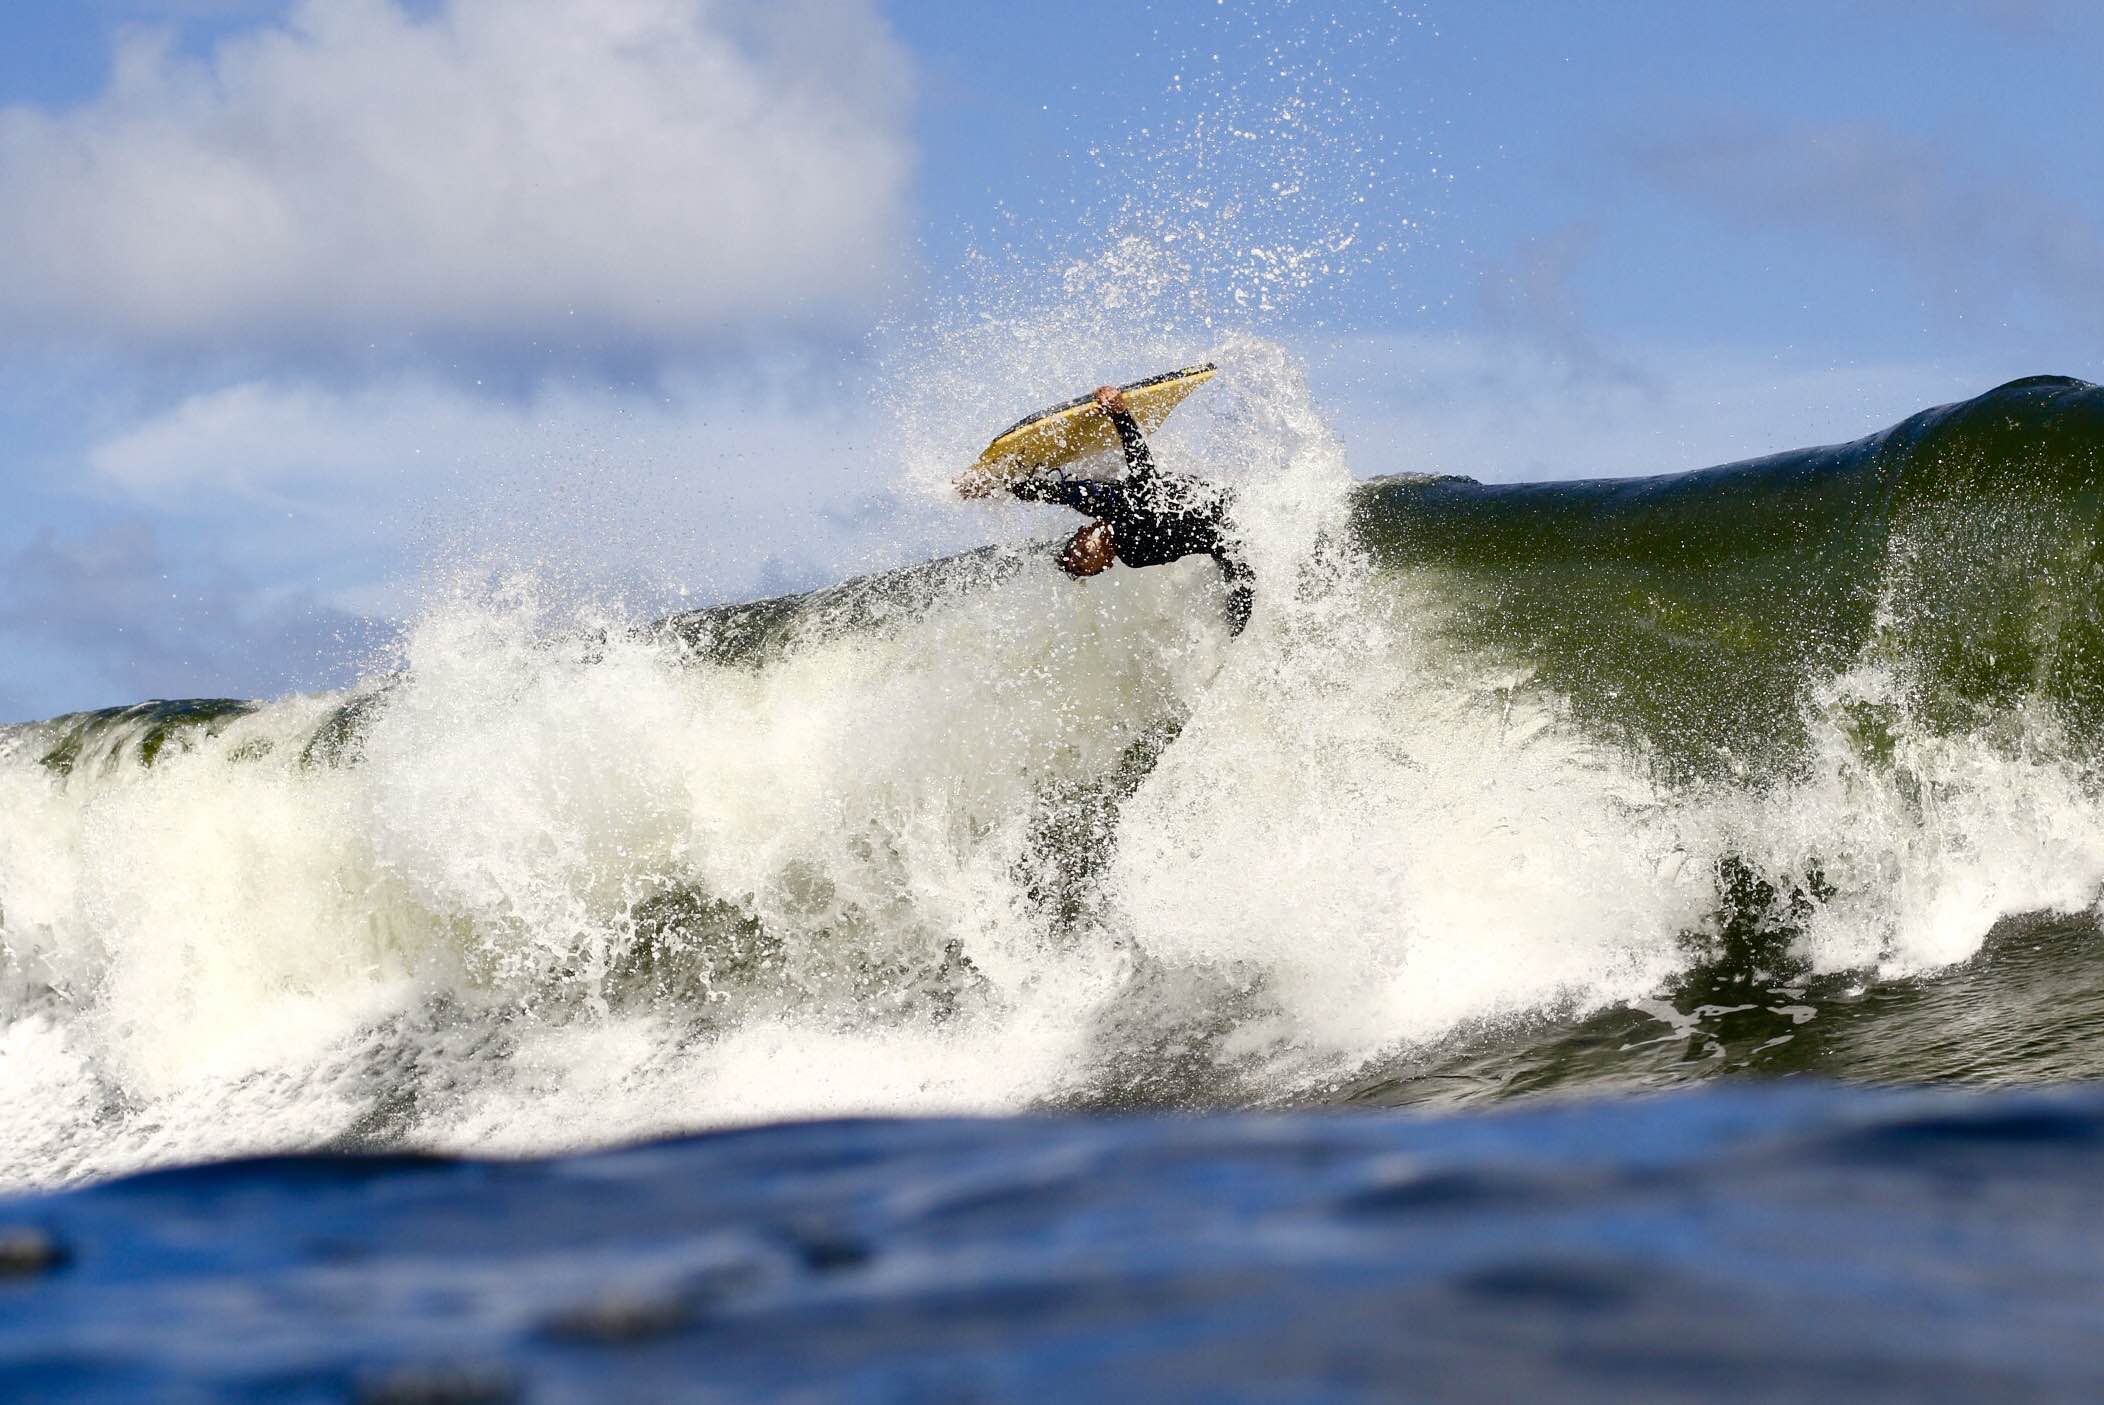 Sammy Morretino catching air during the Miller’s Surf Big Island Challenge Nov. 19, 2016, at Honoli‘i Beach just north of Hilo, Hawai‘i. Photo: Tyler Rock/ Hawaii Bodyboarding Pro Tour.